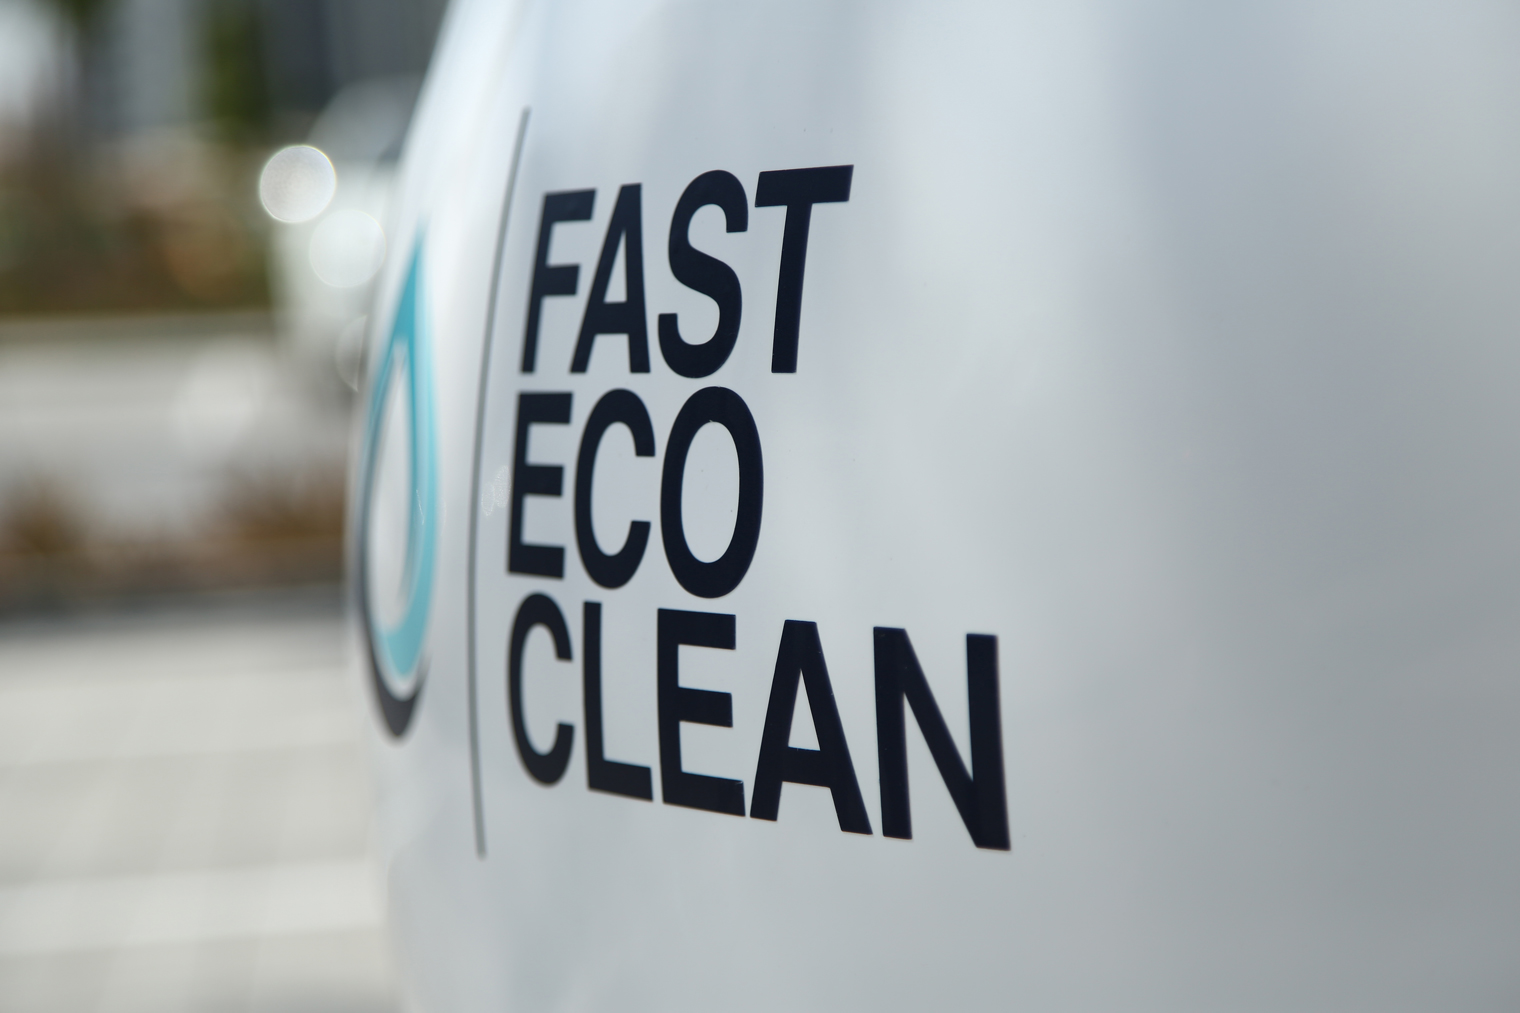 logo sur machine Fast eco clean